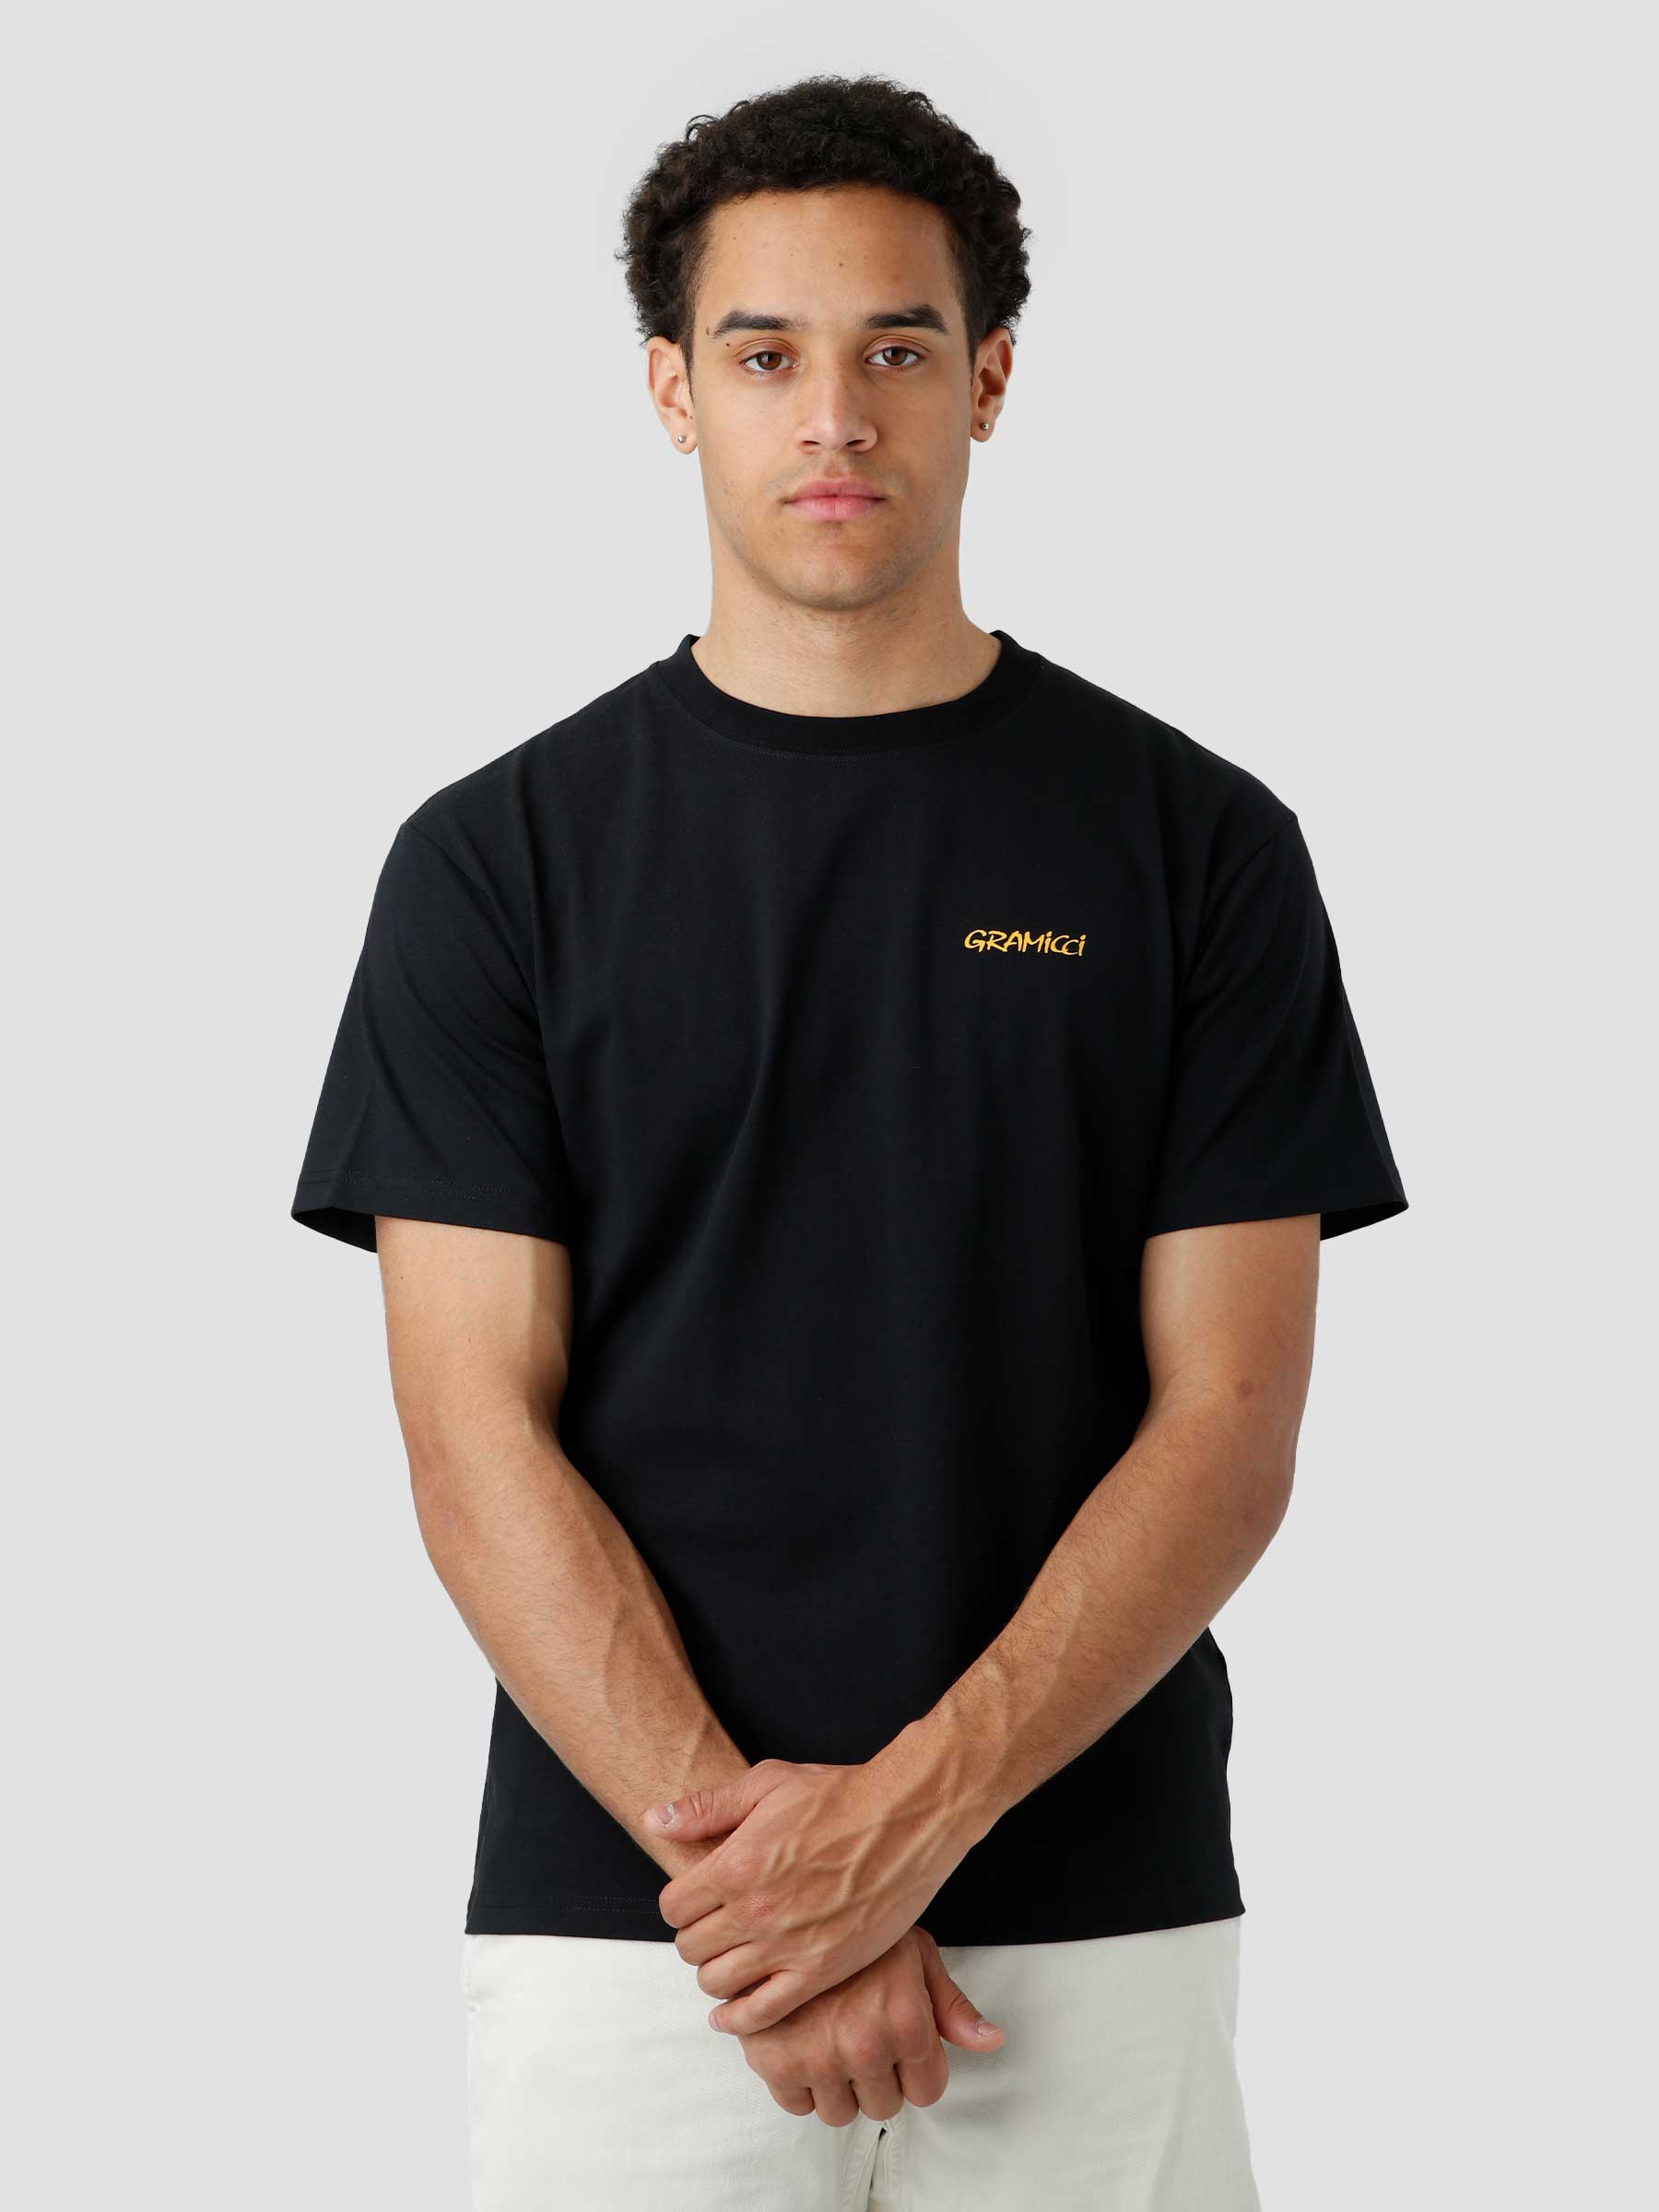 Dawn Wall T-shirt Black G2SU-T010